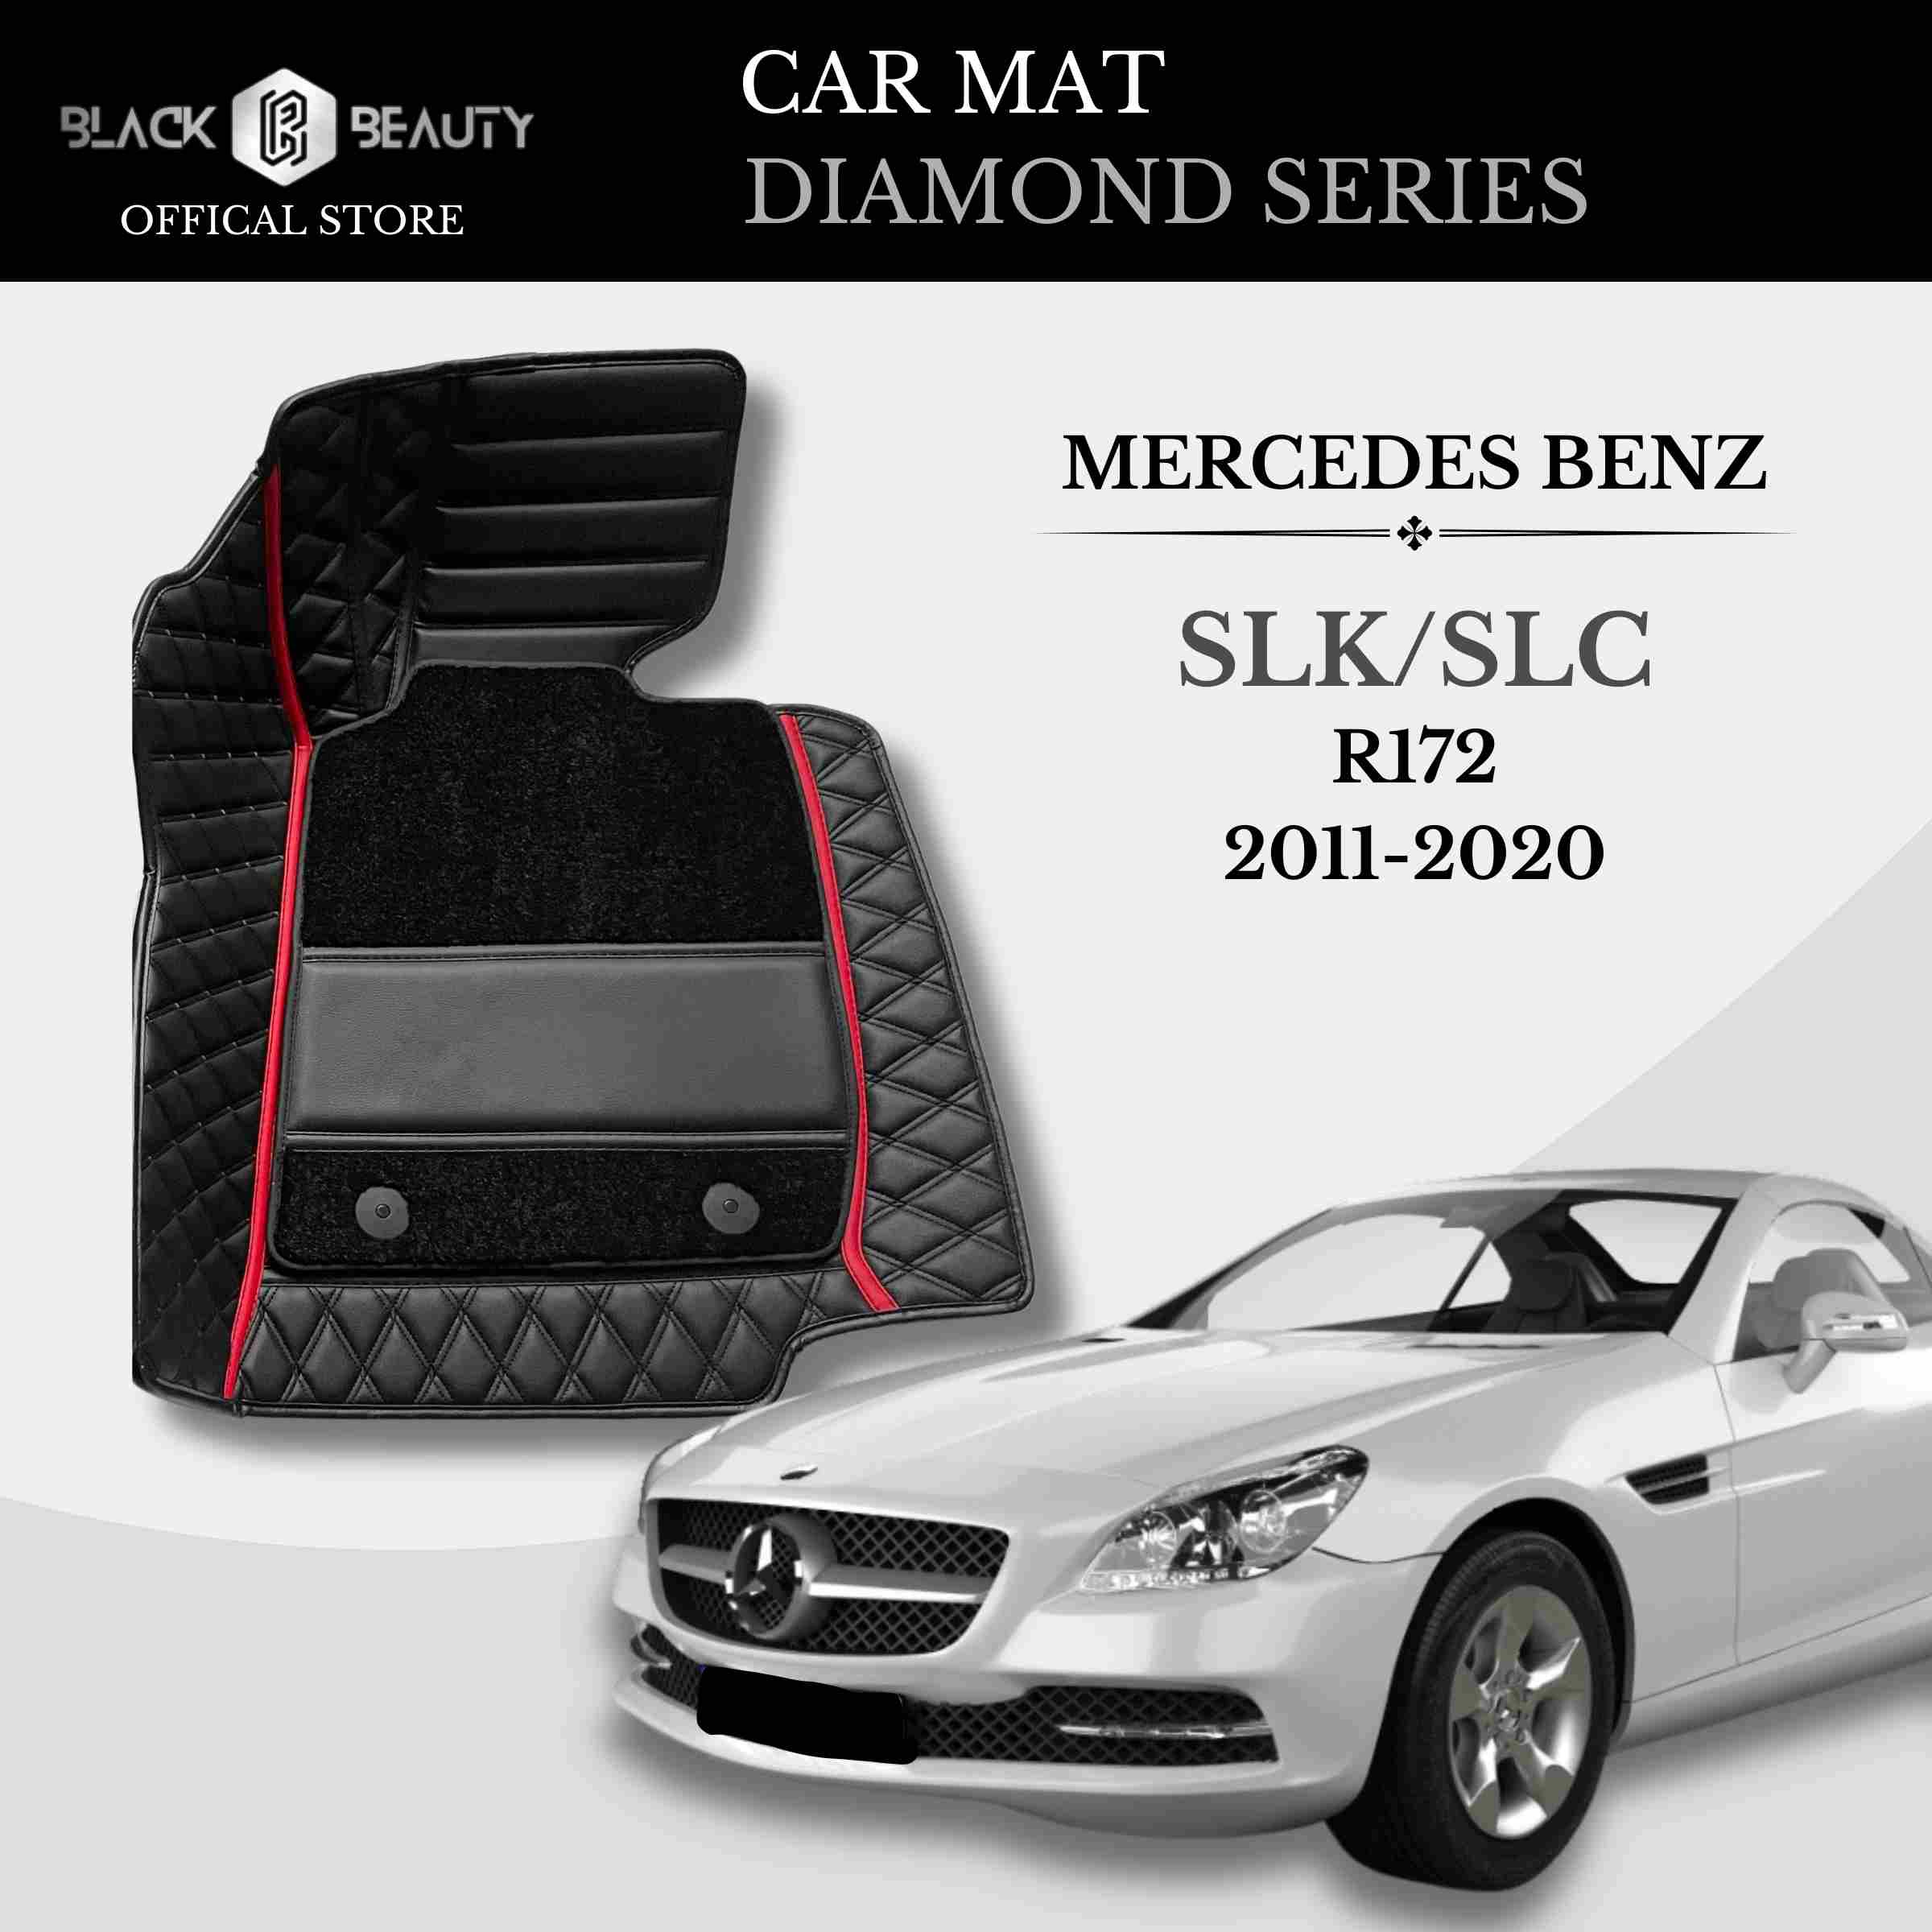 Mercedes Benz SLK/SLC R172 (2011-2020) - Diamond Series Car Mat